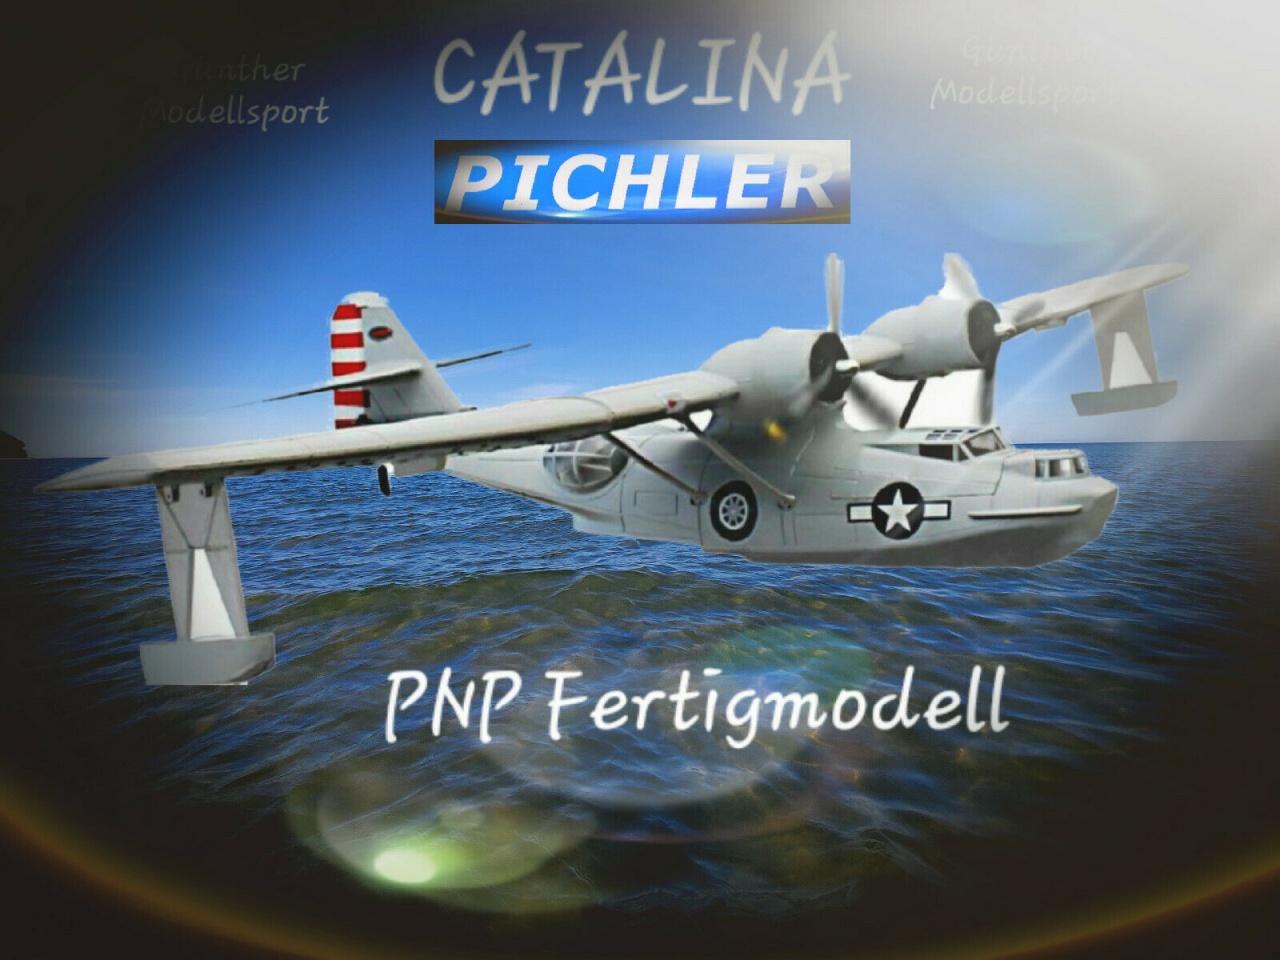 Pichler Catalina grau Fertigmodell PNP, C9094